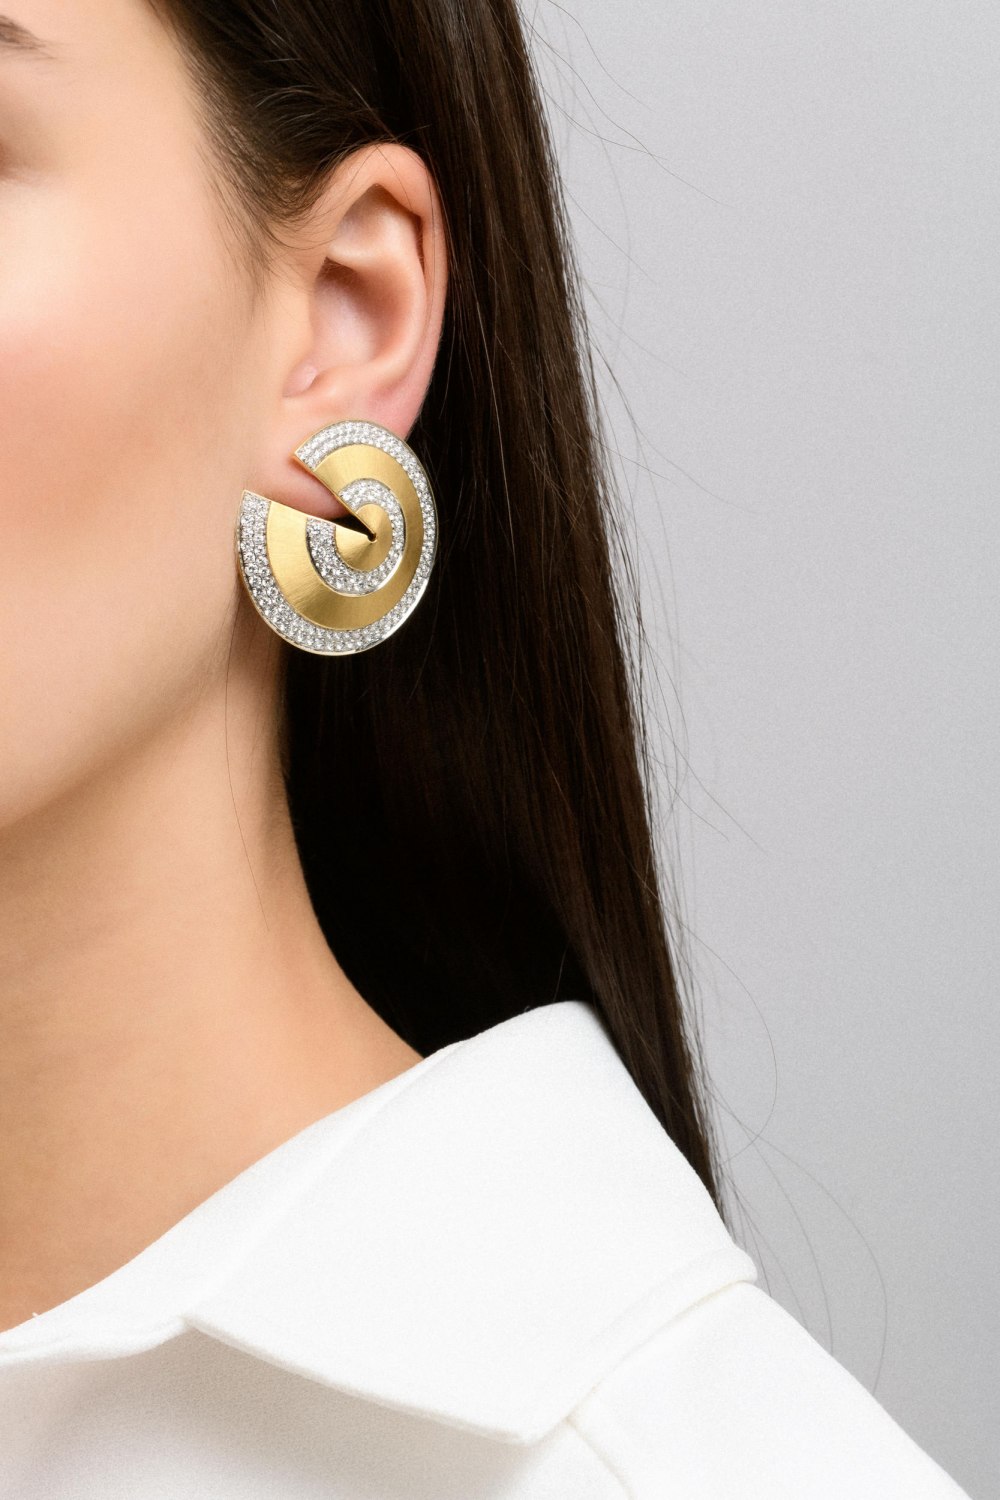 SUTRA - Circular Diamond Earrings